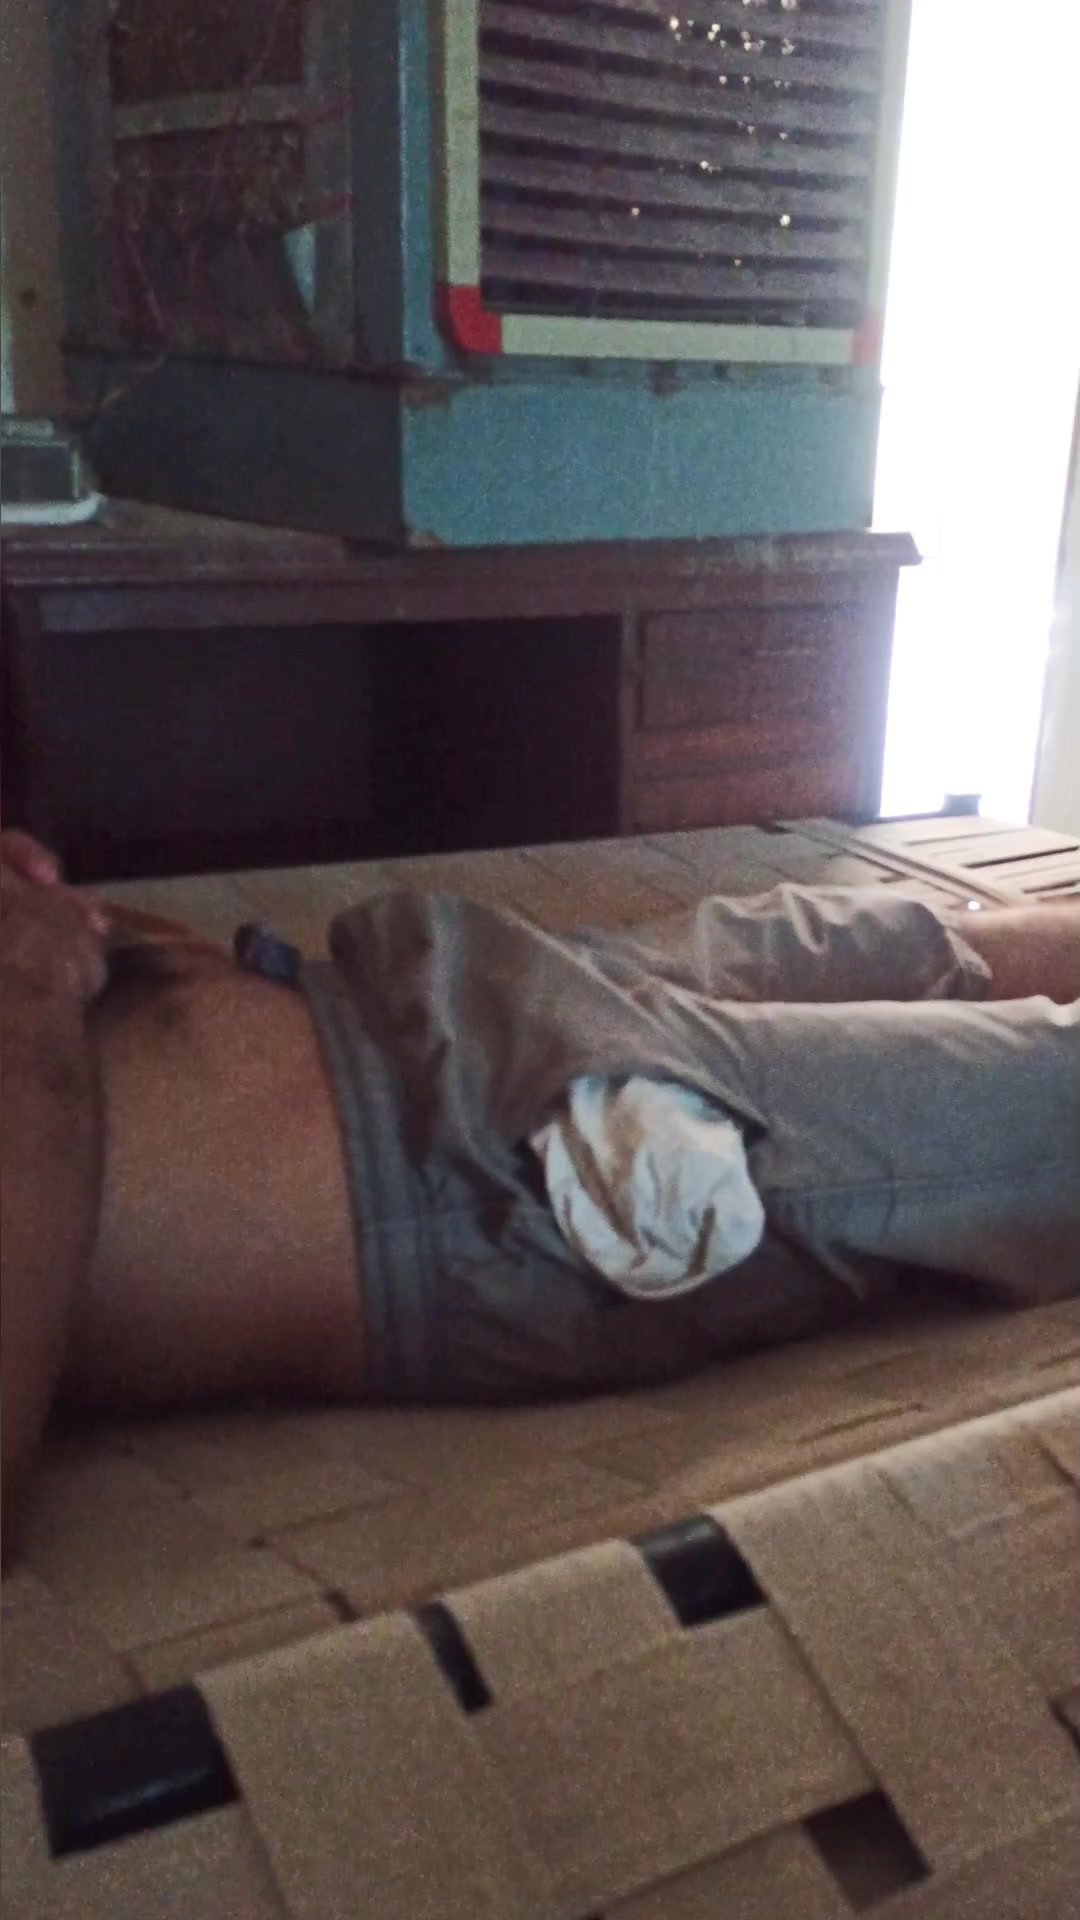 Hostel Spy Faizan sleeping videos